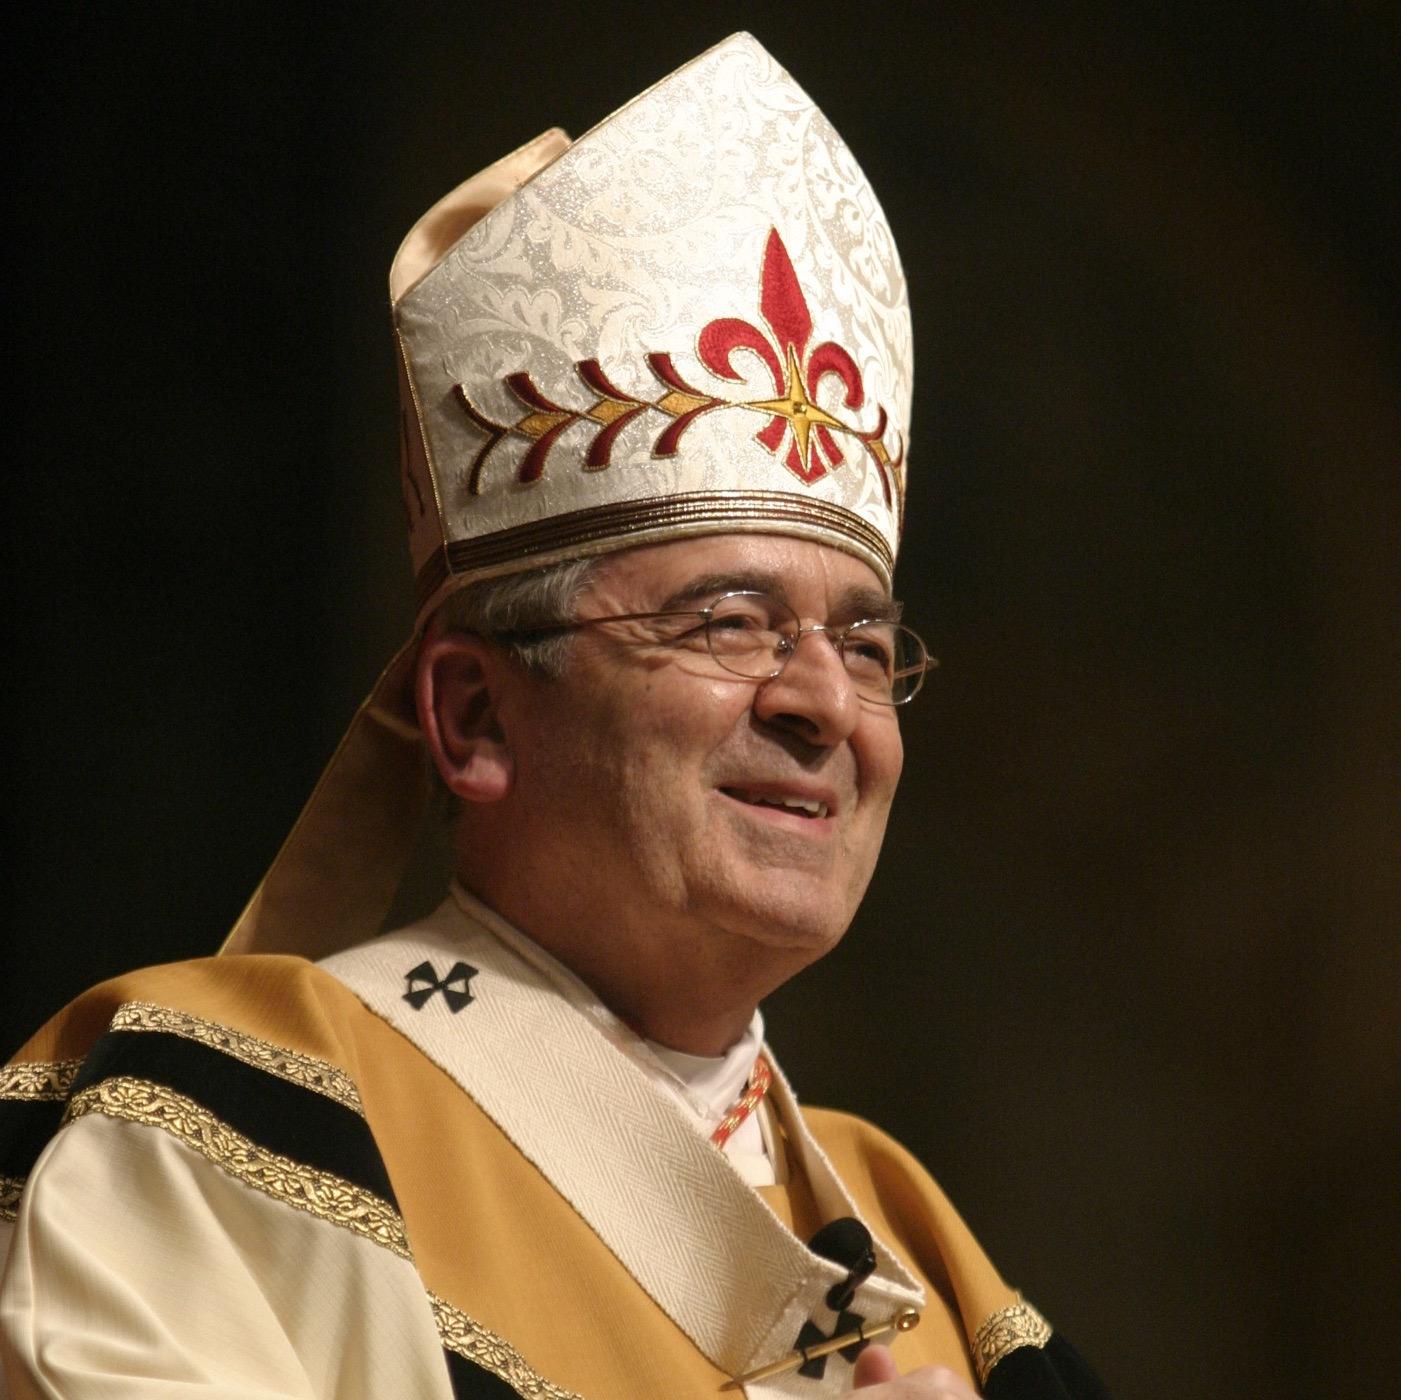 Archbishop Emeritus of Philadelphia